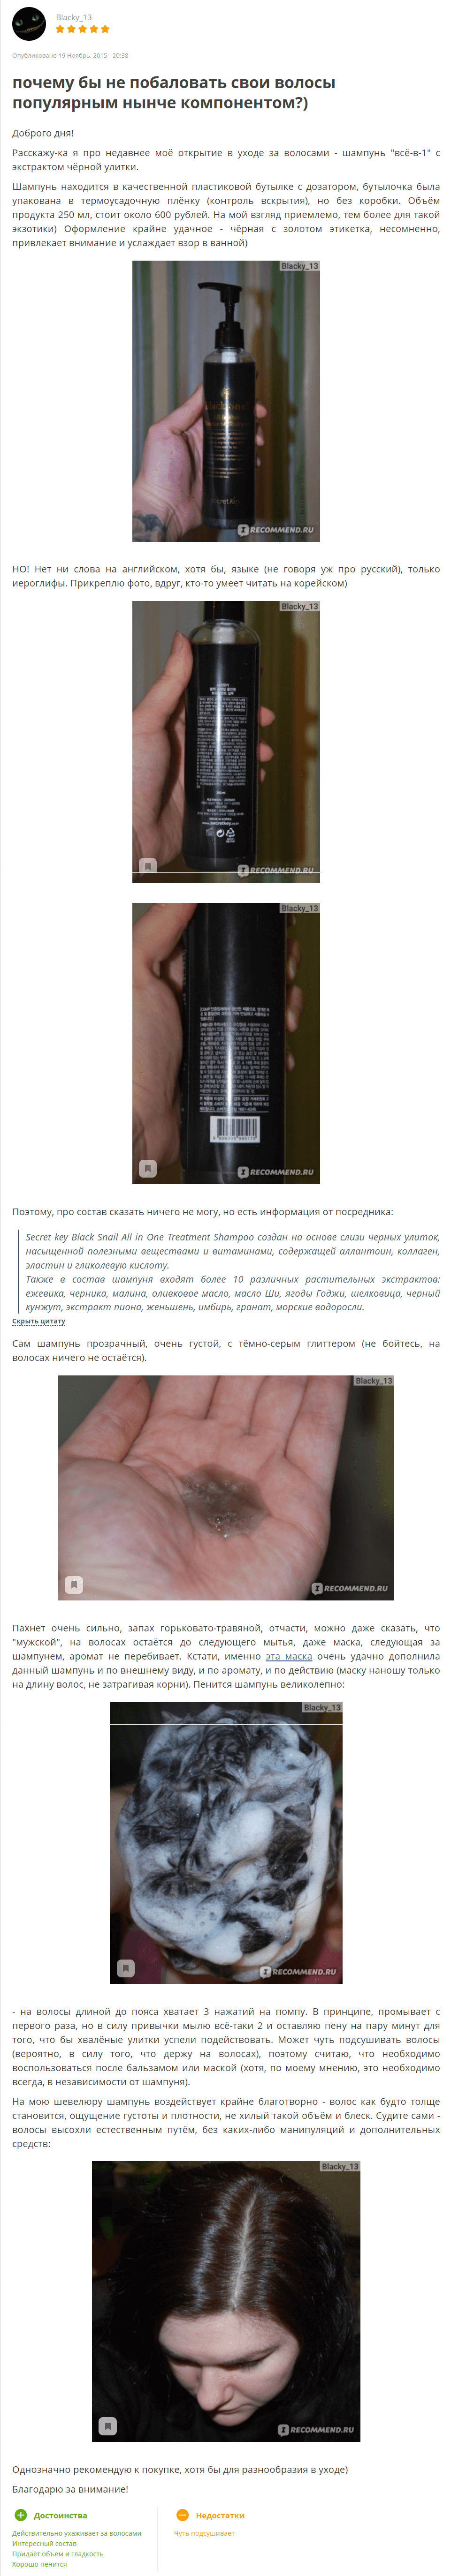 Black Snail All In One Treatment Shampoo [SECRET SKIN] отзыв 2 (1)